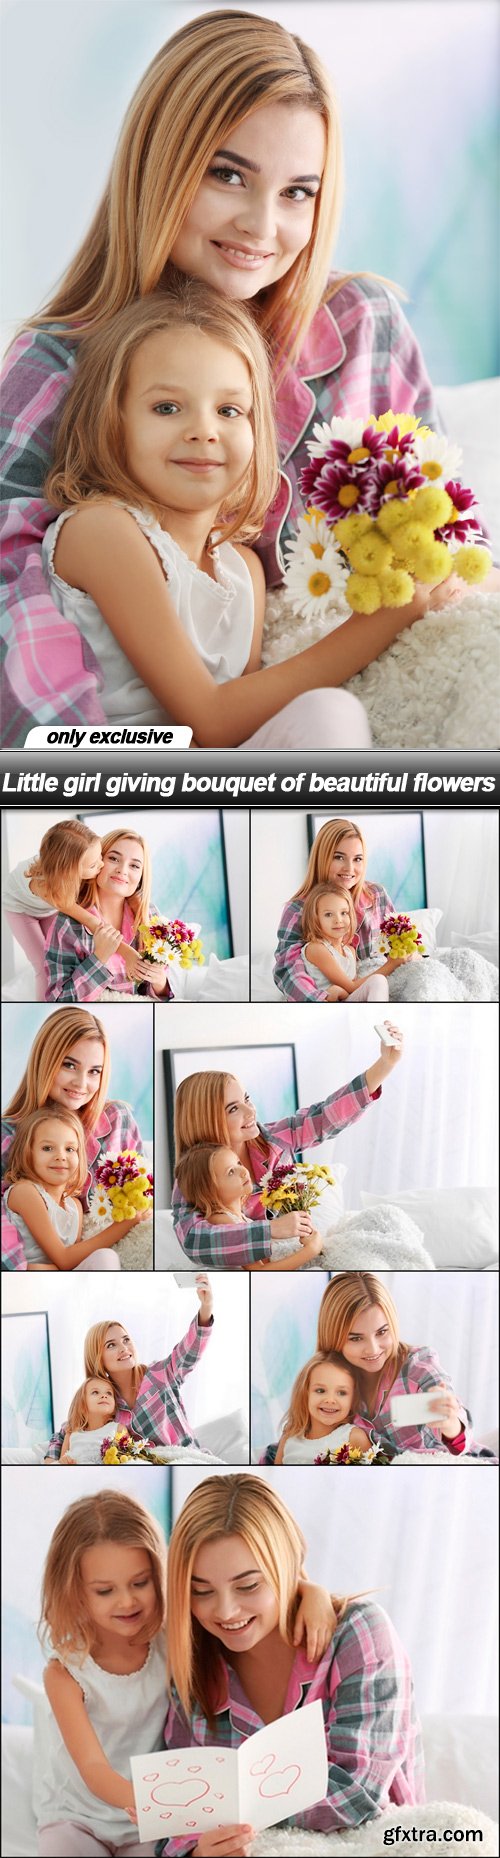 Little girl giving bouquet of beautiful flowers - 7 UHQ JPEG